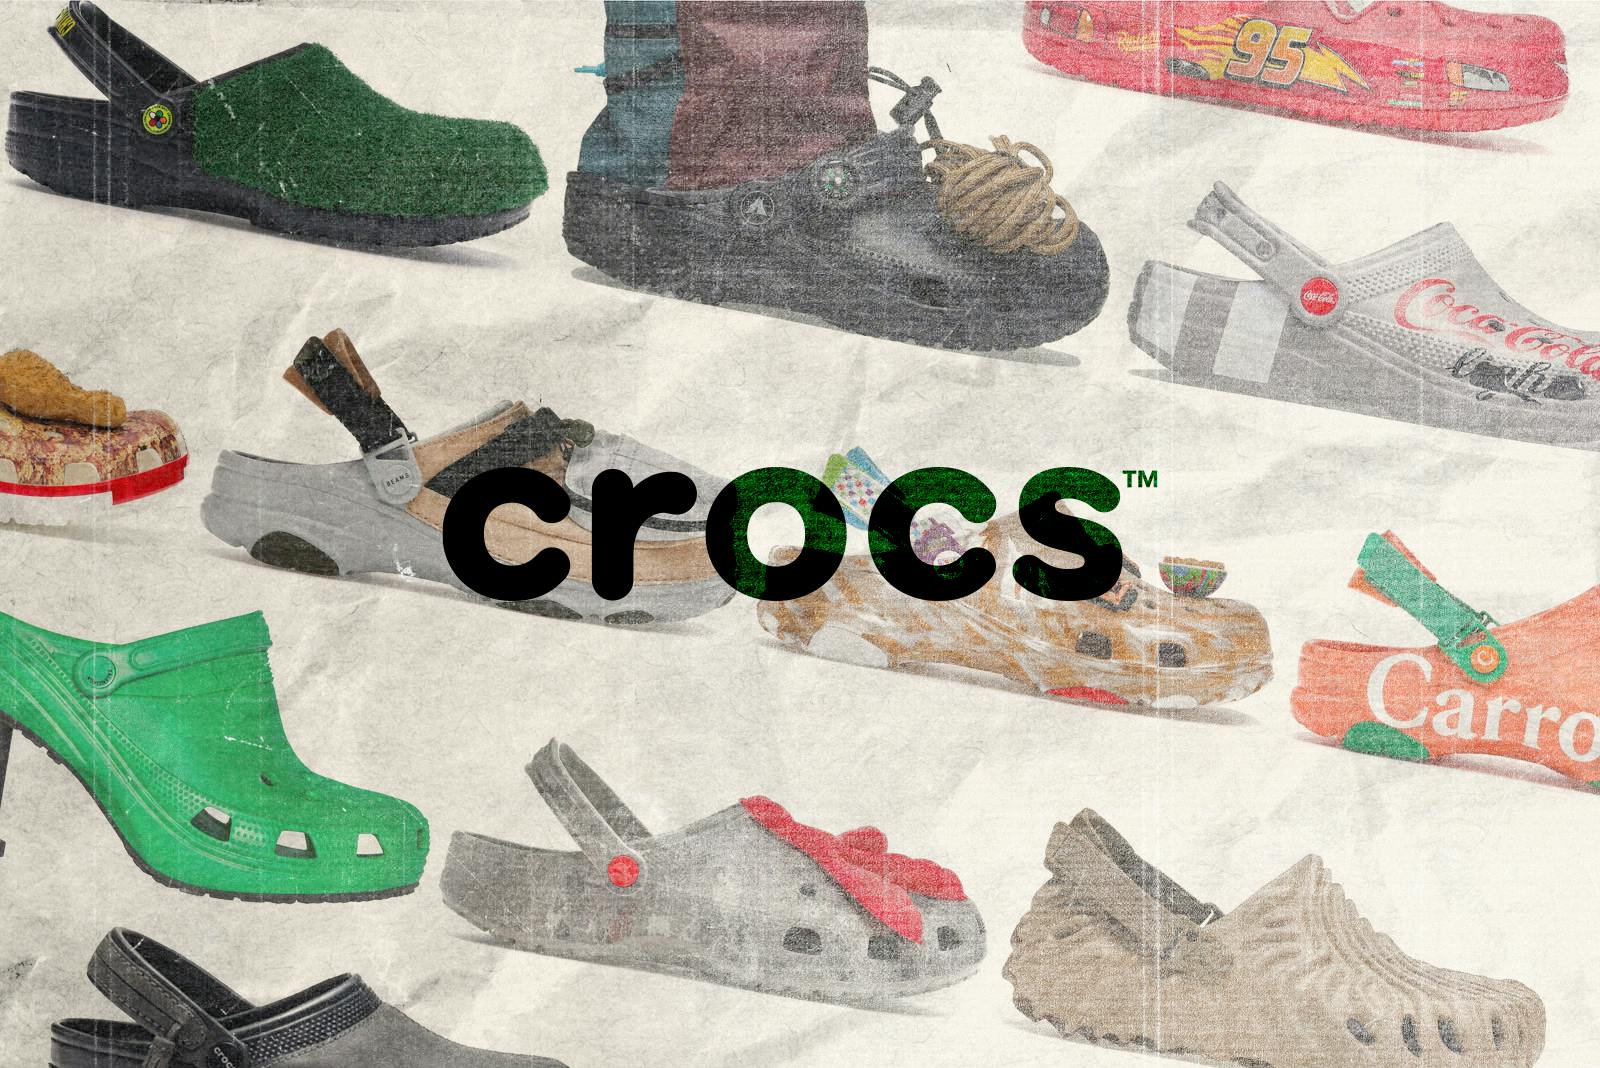 Palace x Crocs Classic Clog Collaboration Release